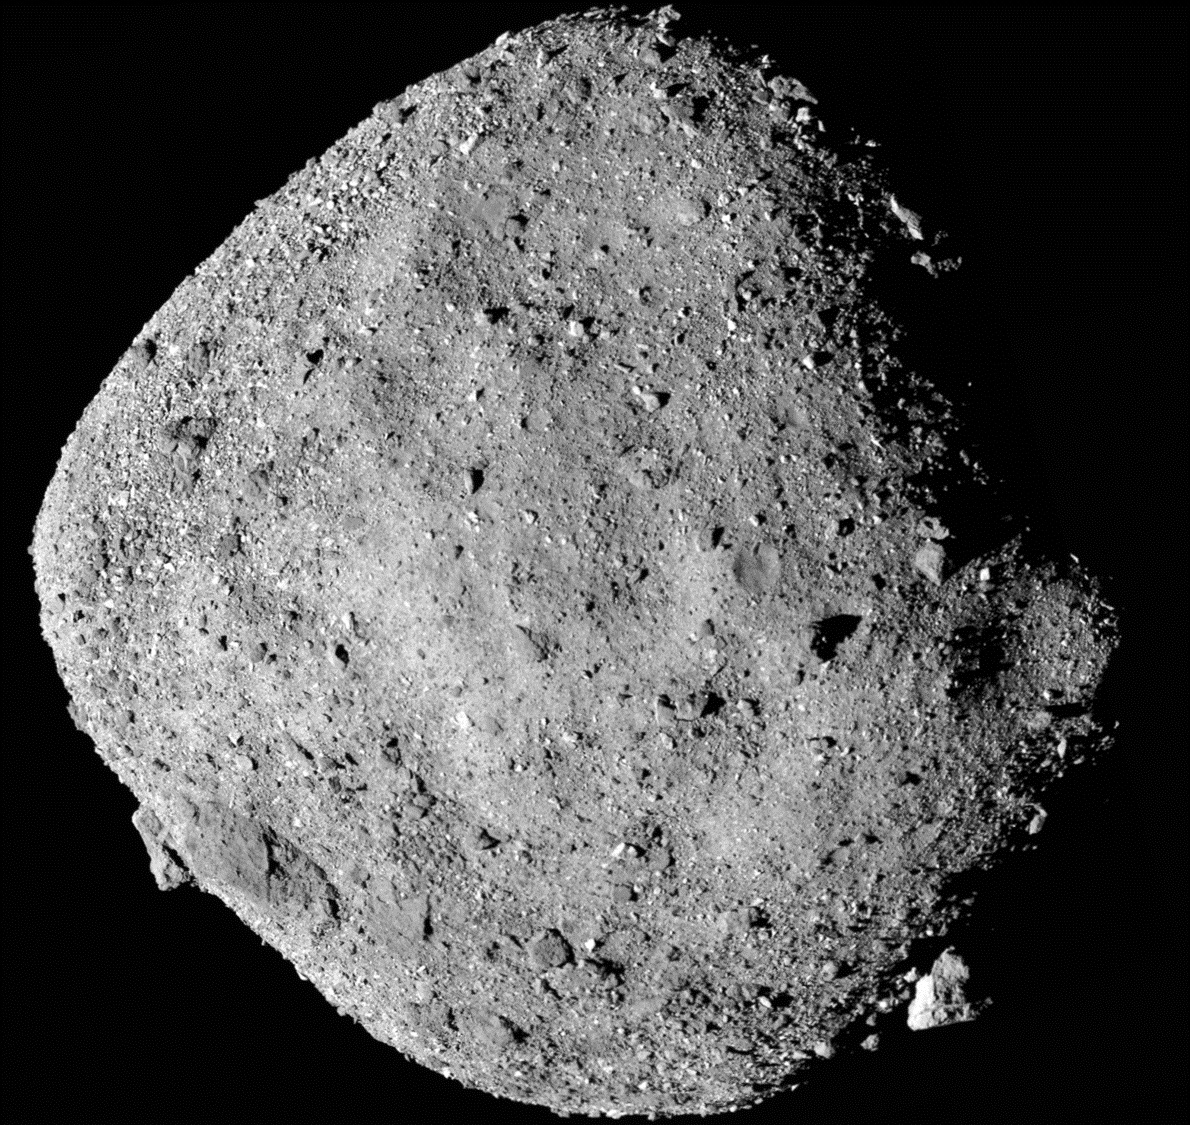 Asteroid Bennu. (Illustration: NASA/Goddard/University of Arizona)